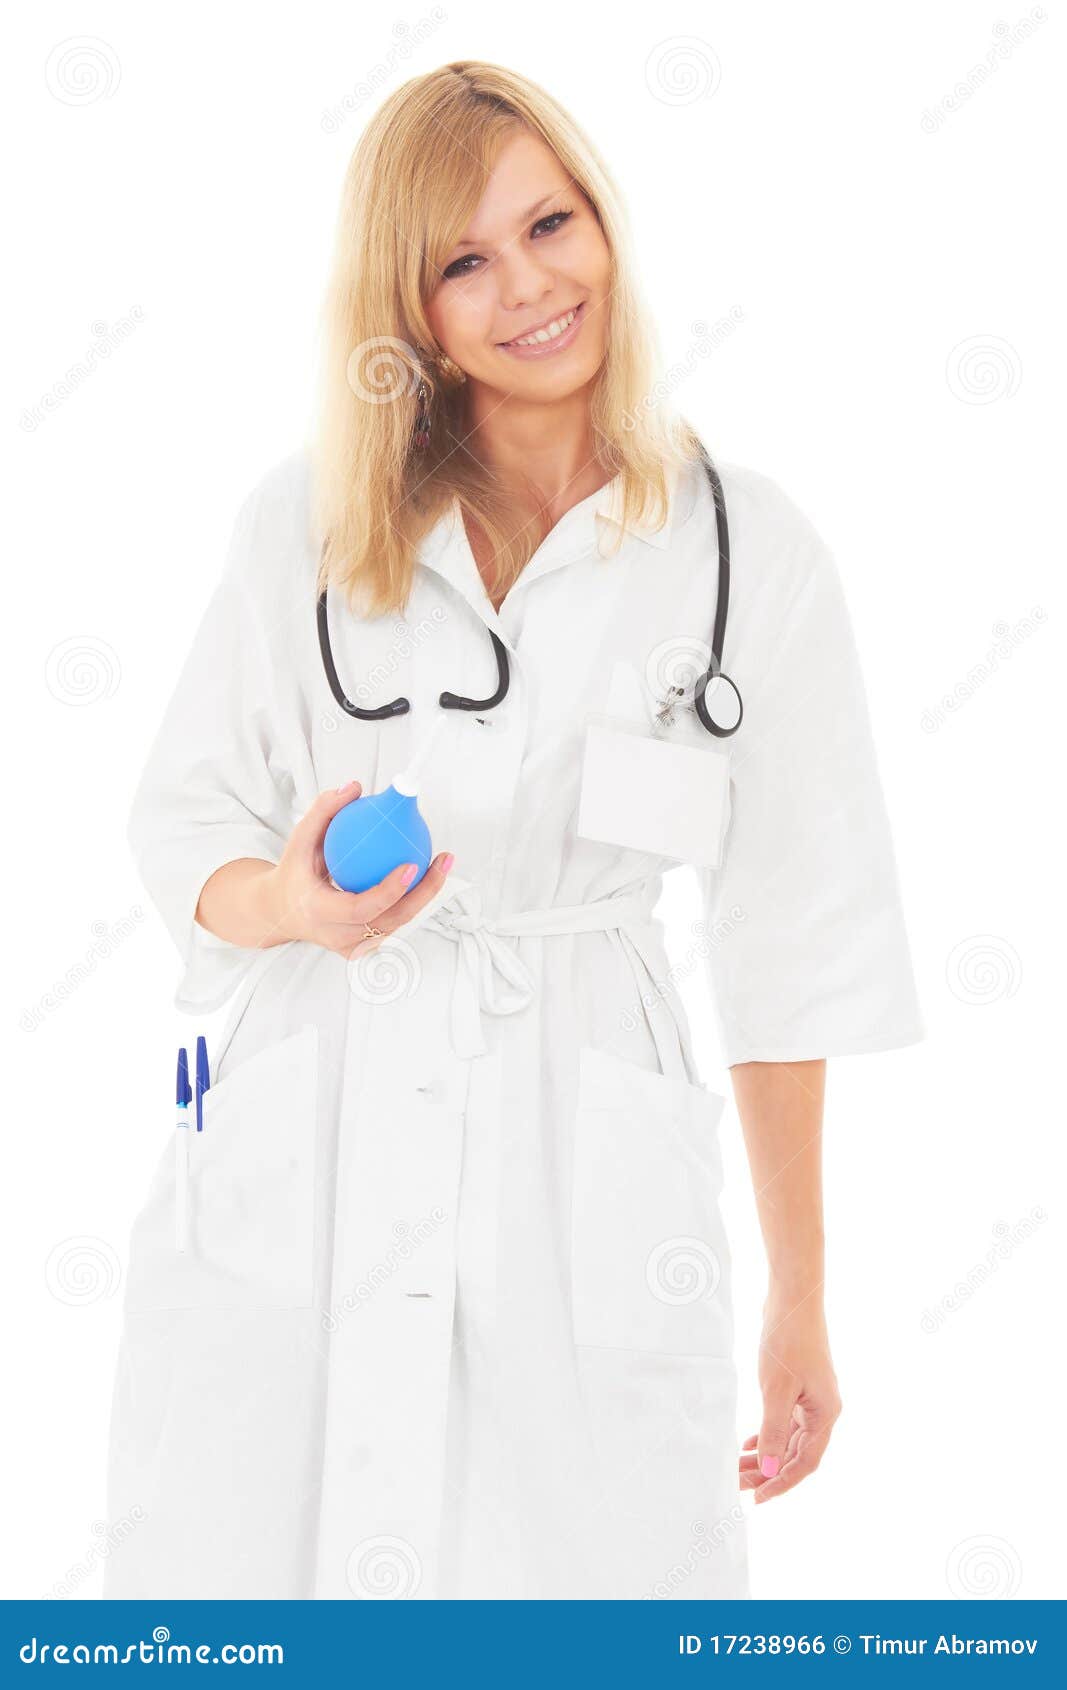 Nurse Has Enema Bag